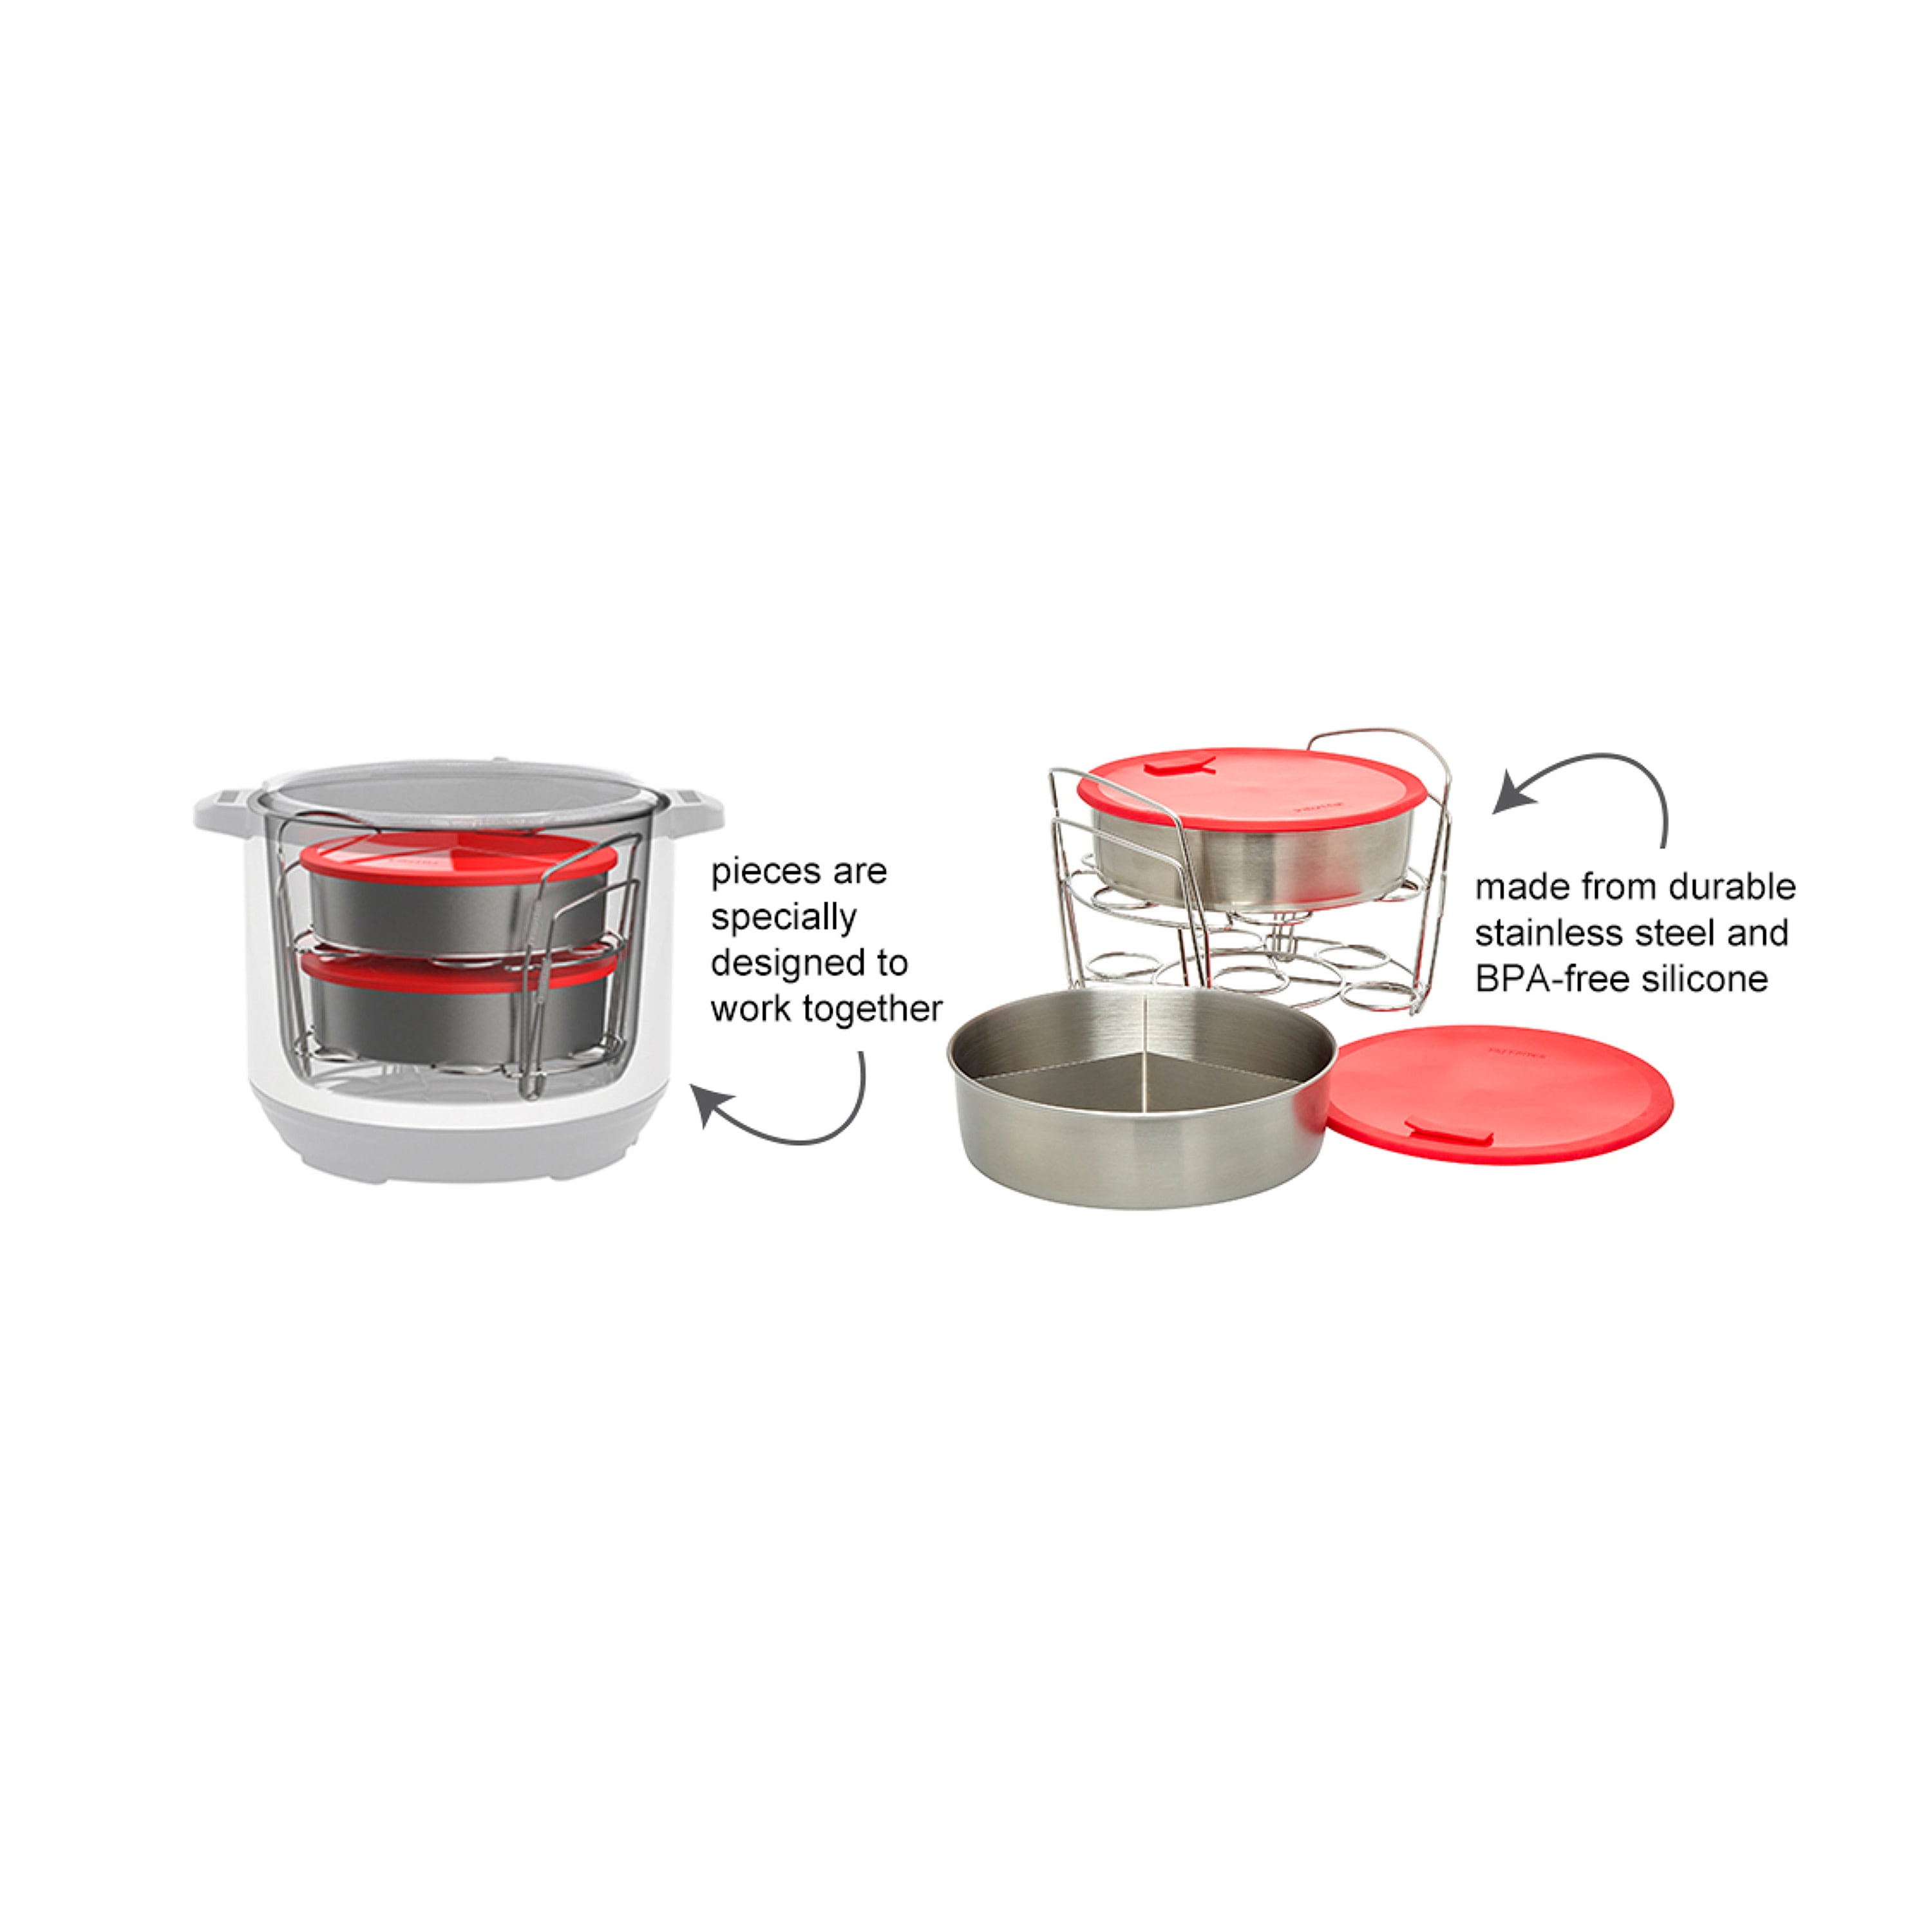 Instant Pot 8-Piece Cooking & Baking Accessories Set 